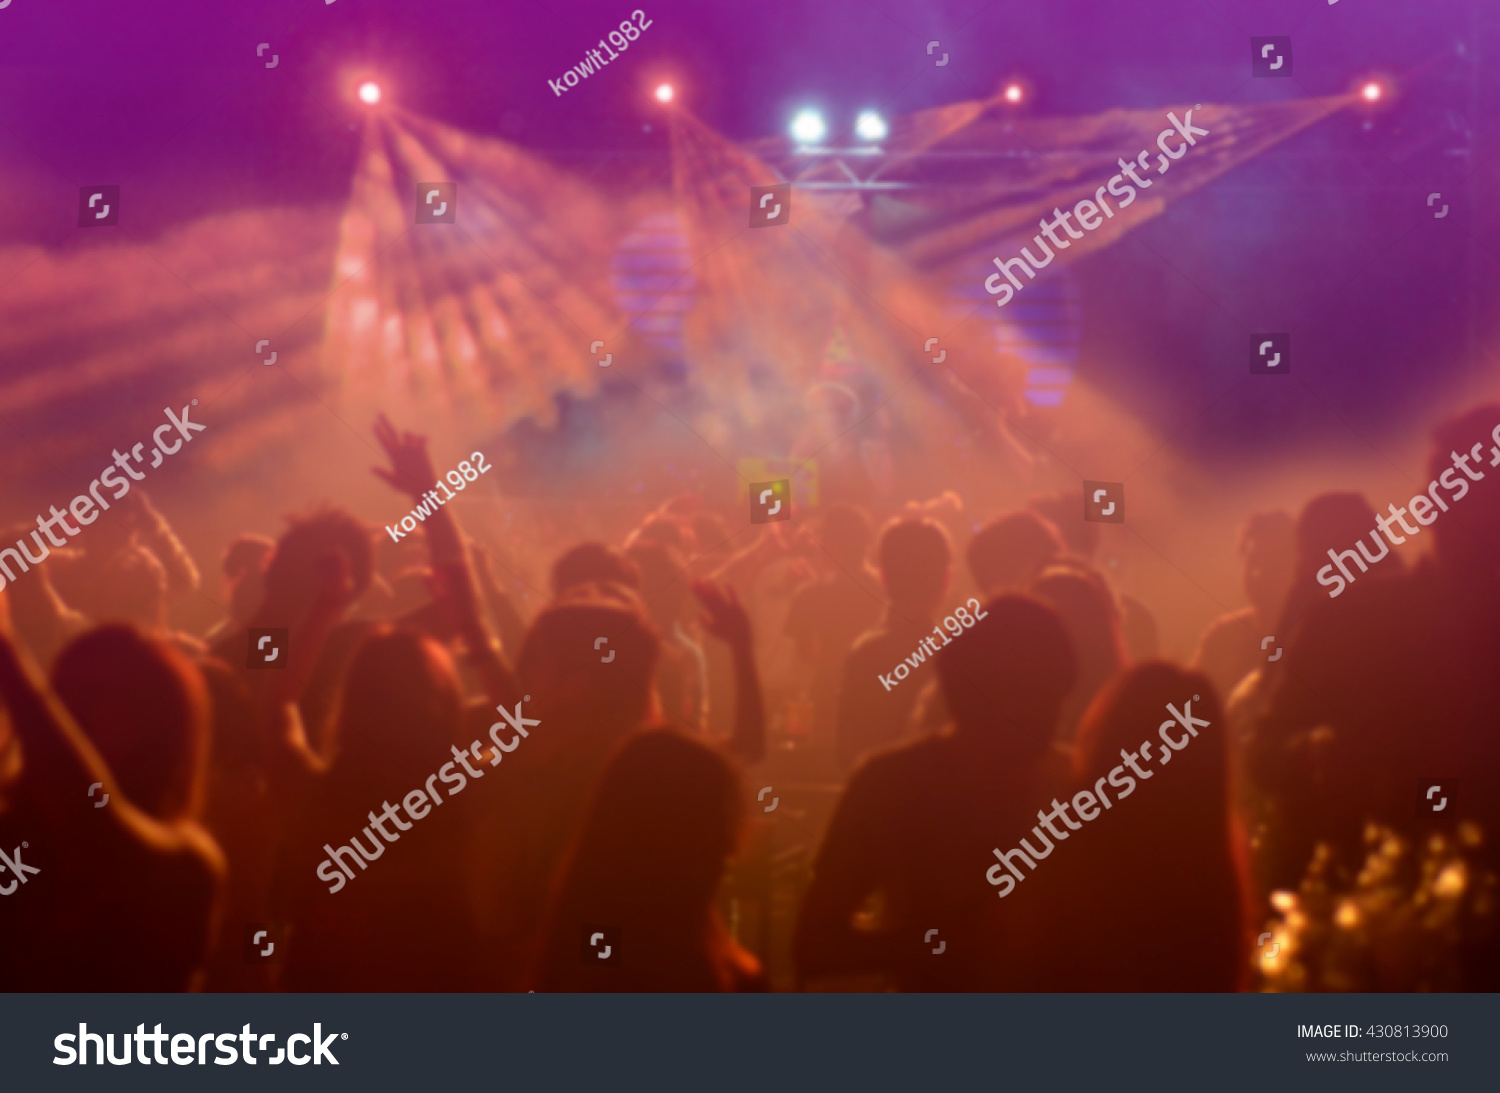 Blur Club Party Stock Photo 430813900 : Shutterstock